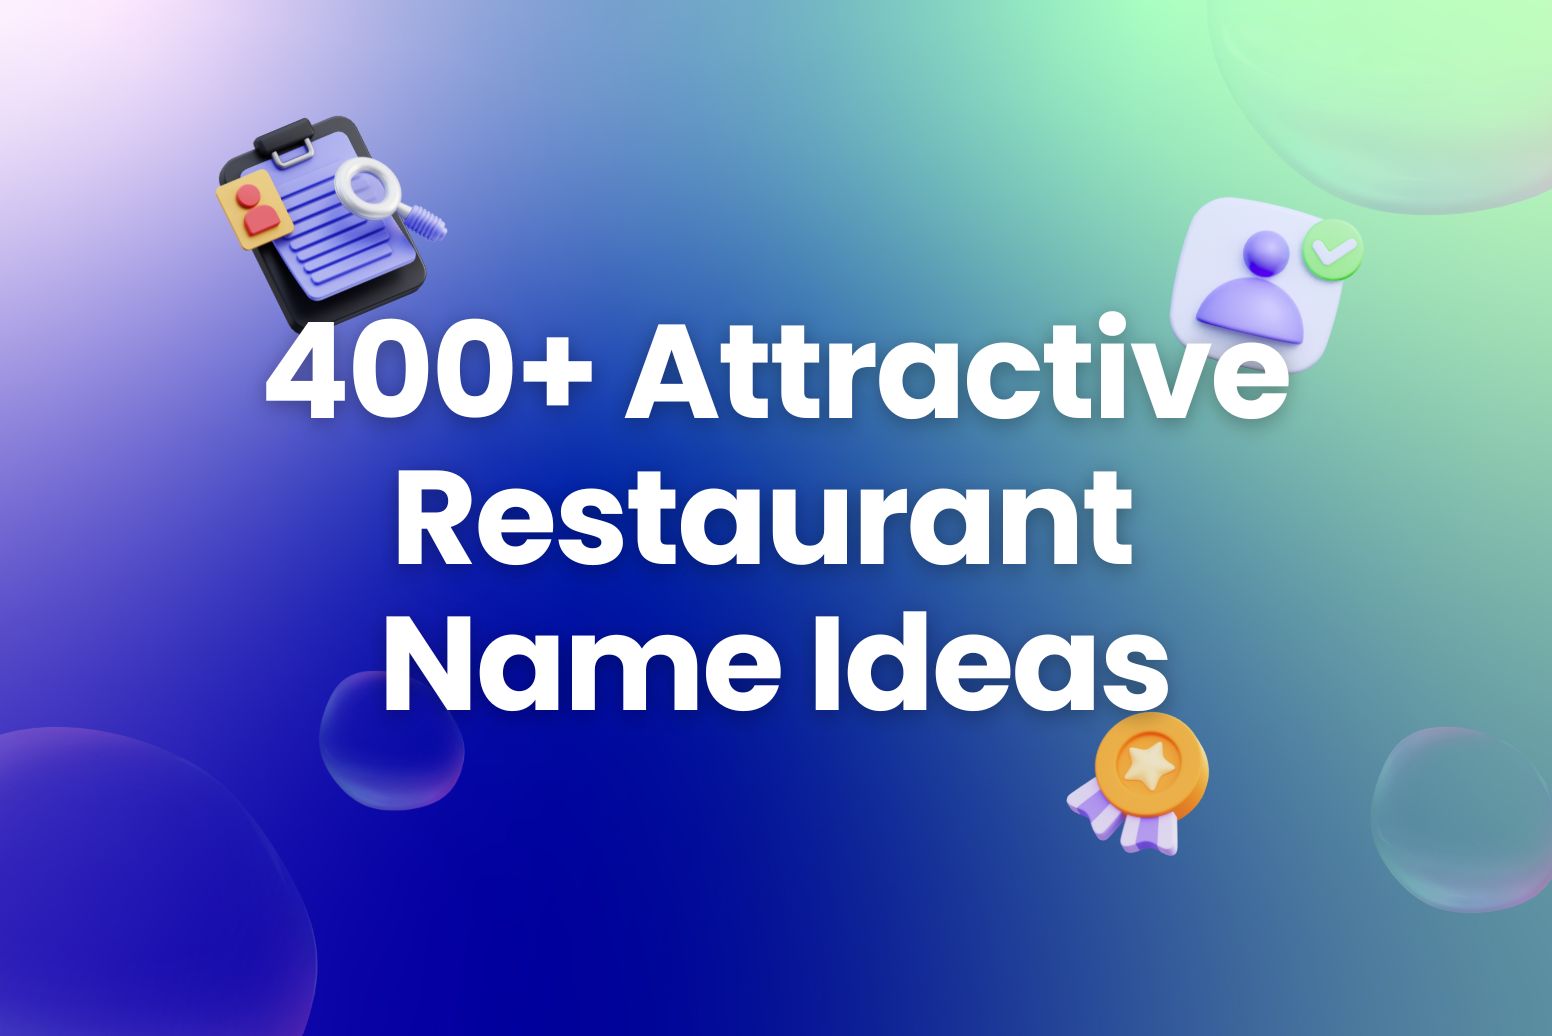 400+ Attractive Restaurant Name Ideas